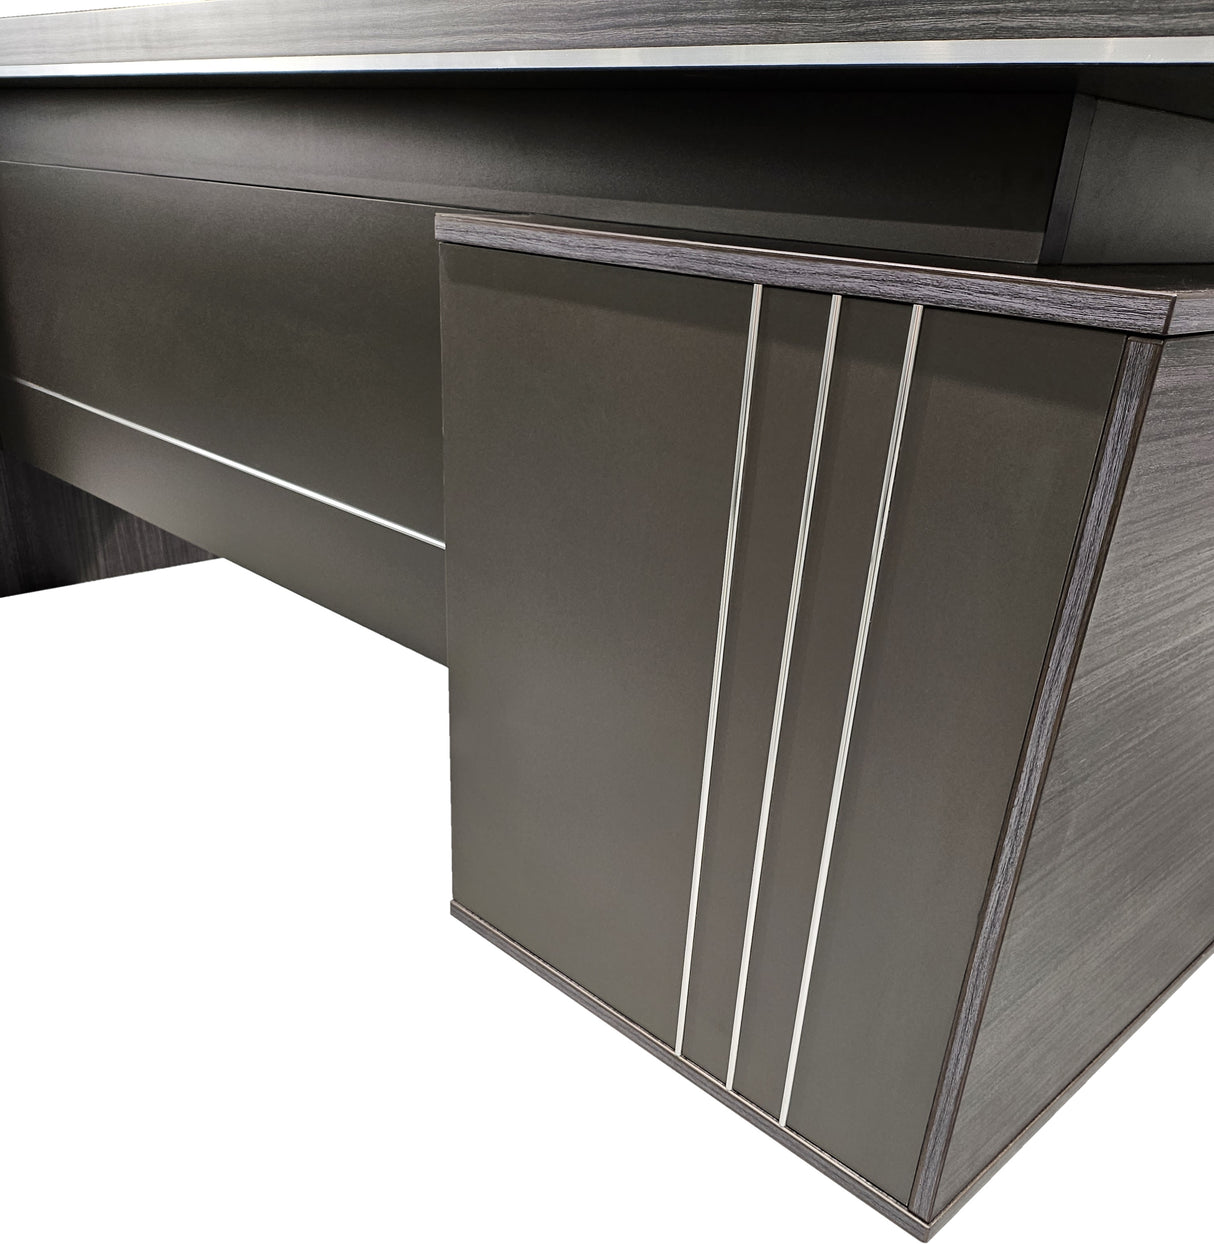 Stylish Grey Oak Veneer Corner Executive Office Desk - 1600mm - DG07-D16